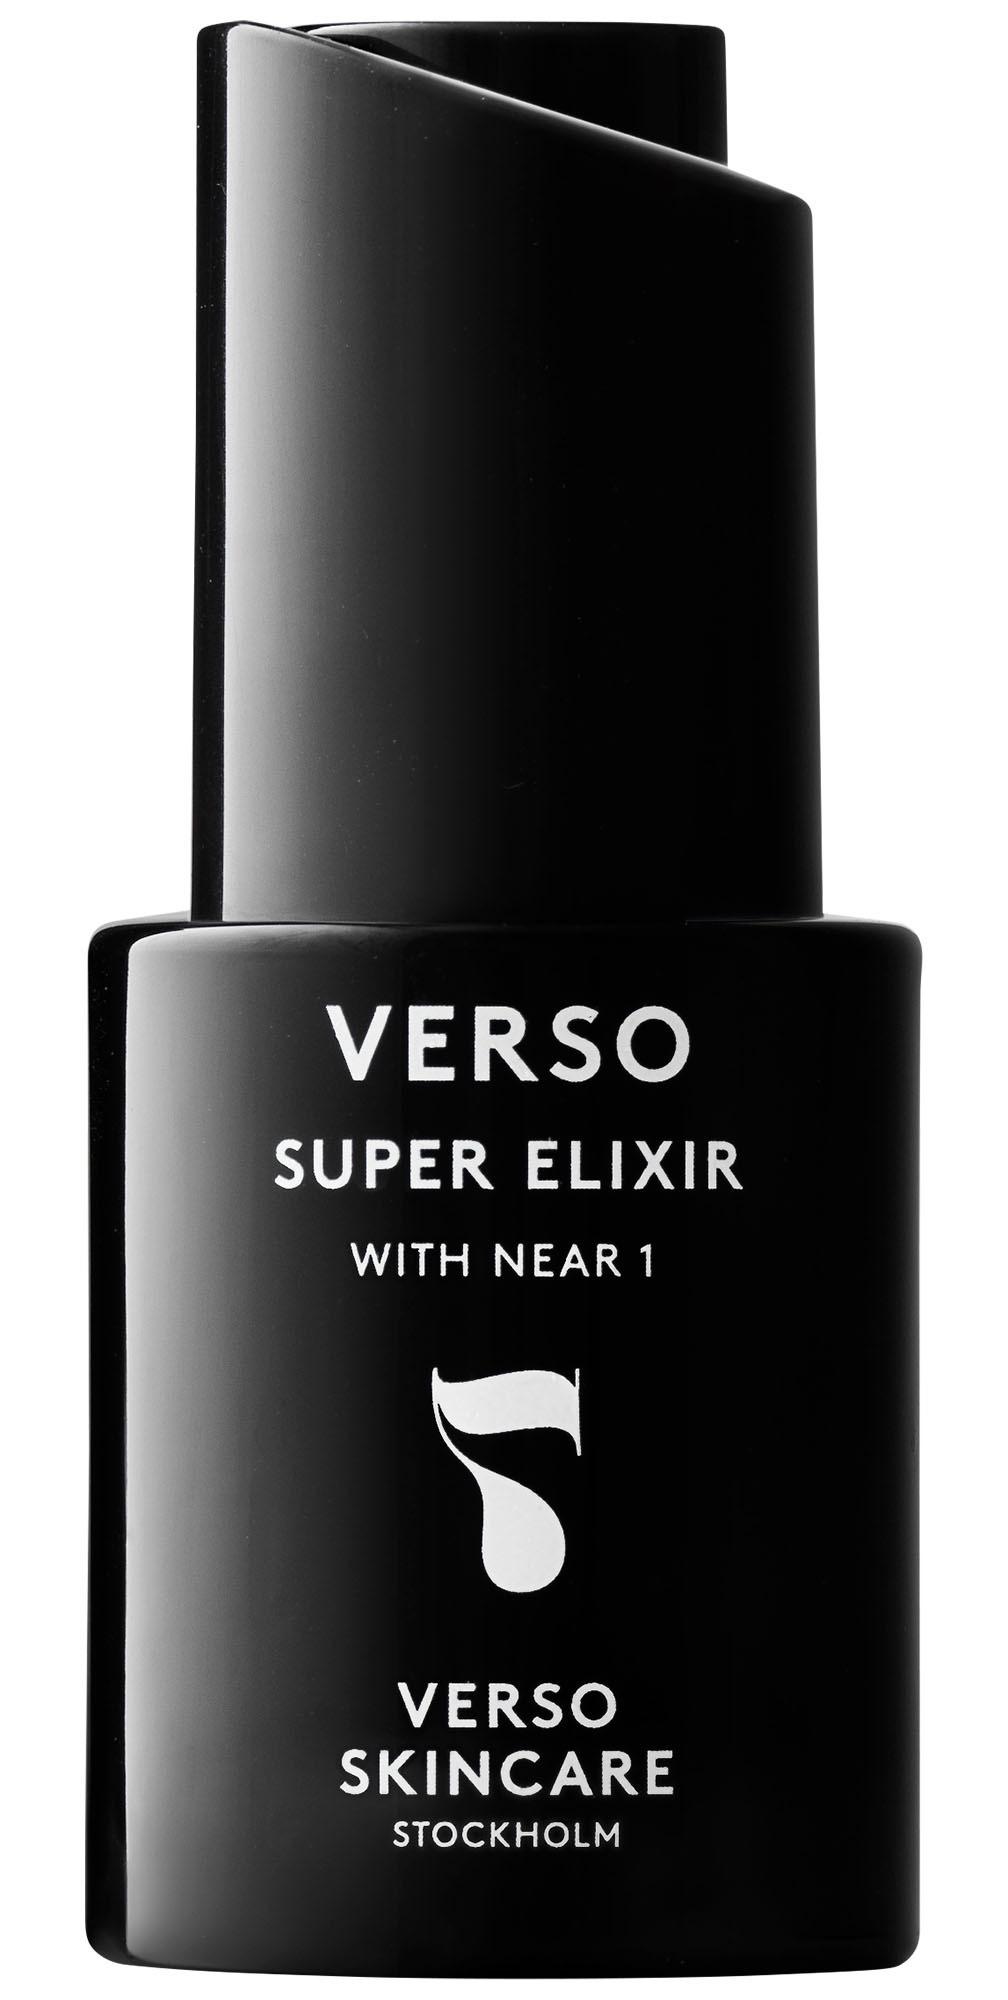 Verso Super Elixir